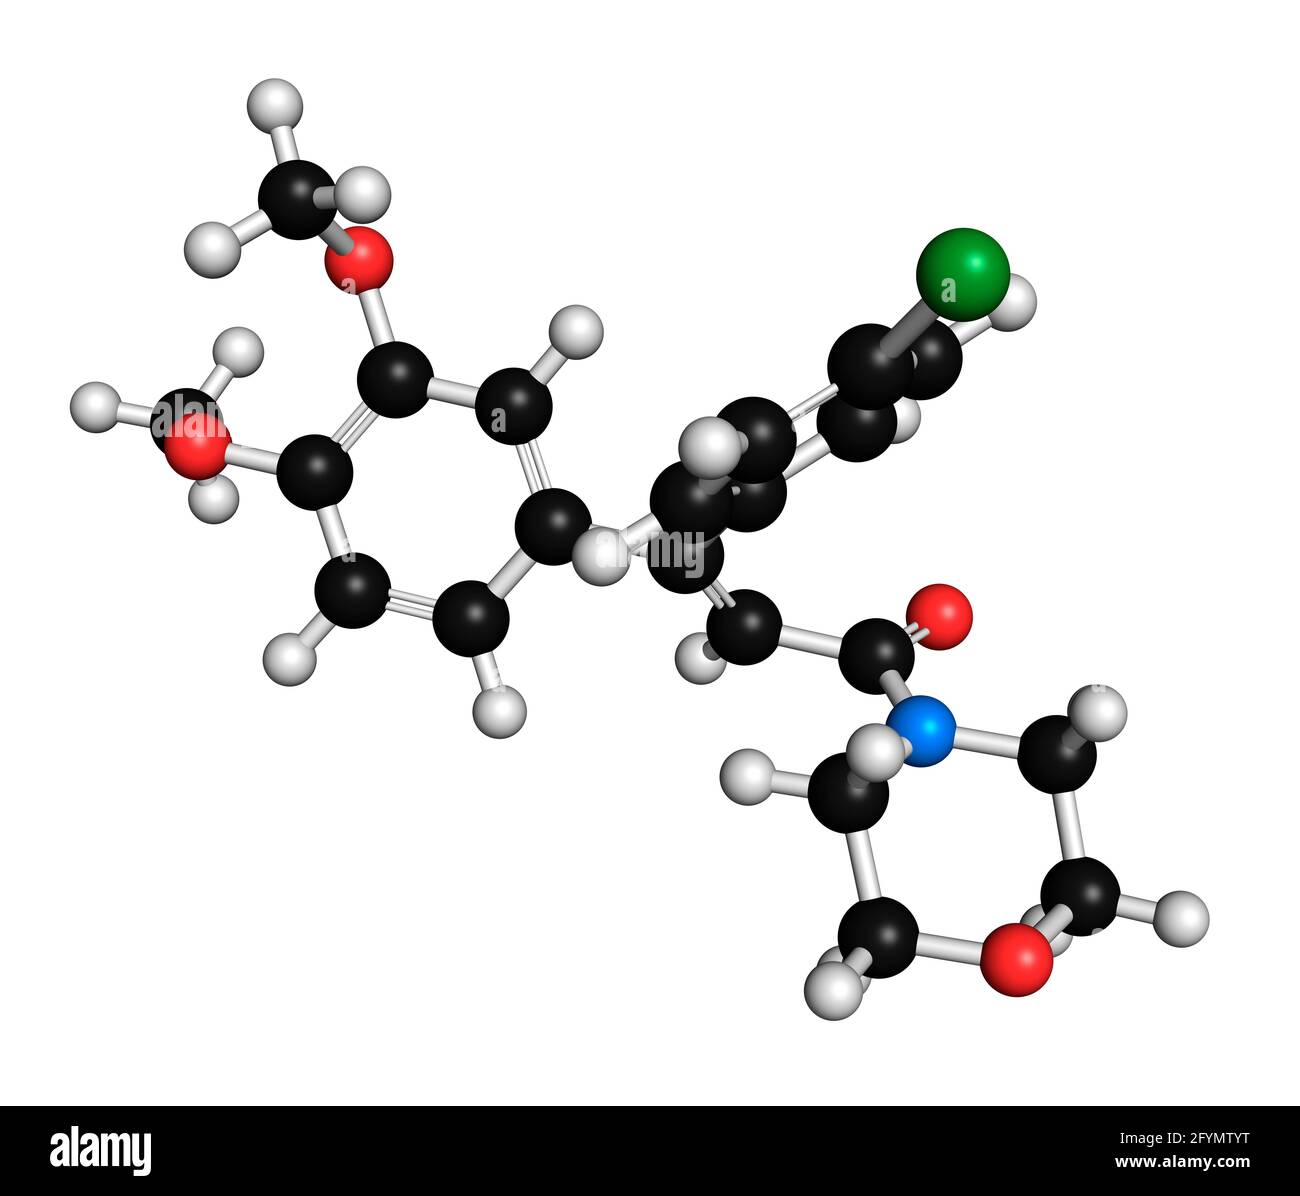 Dimethomorph fungicide molecule, illustration Stock Photo